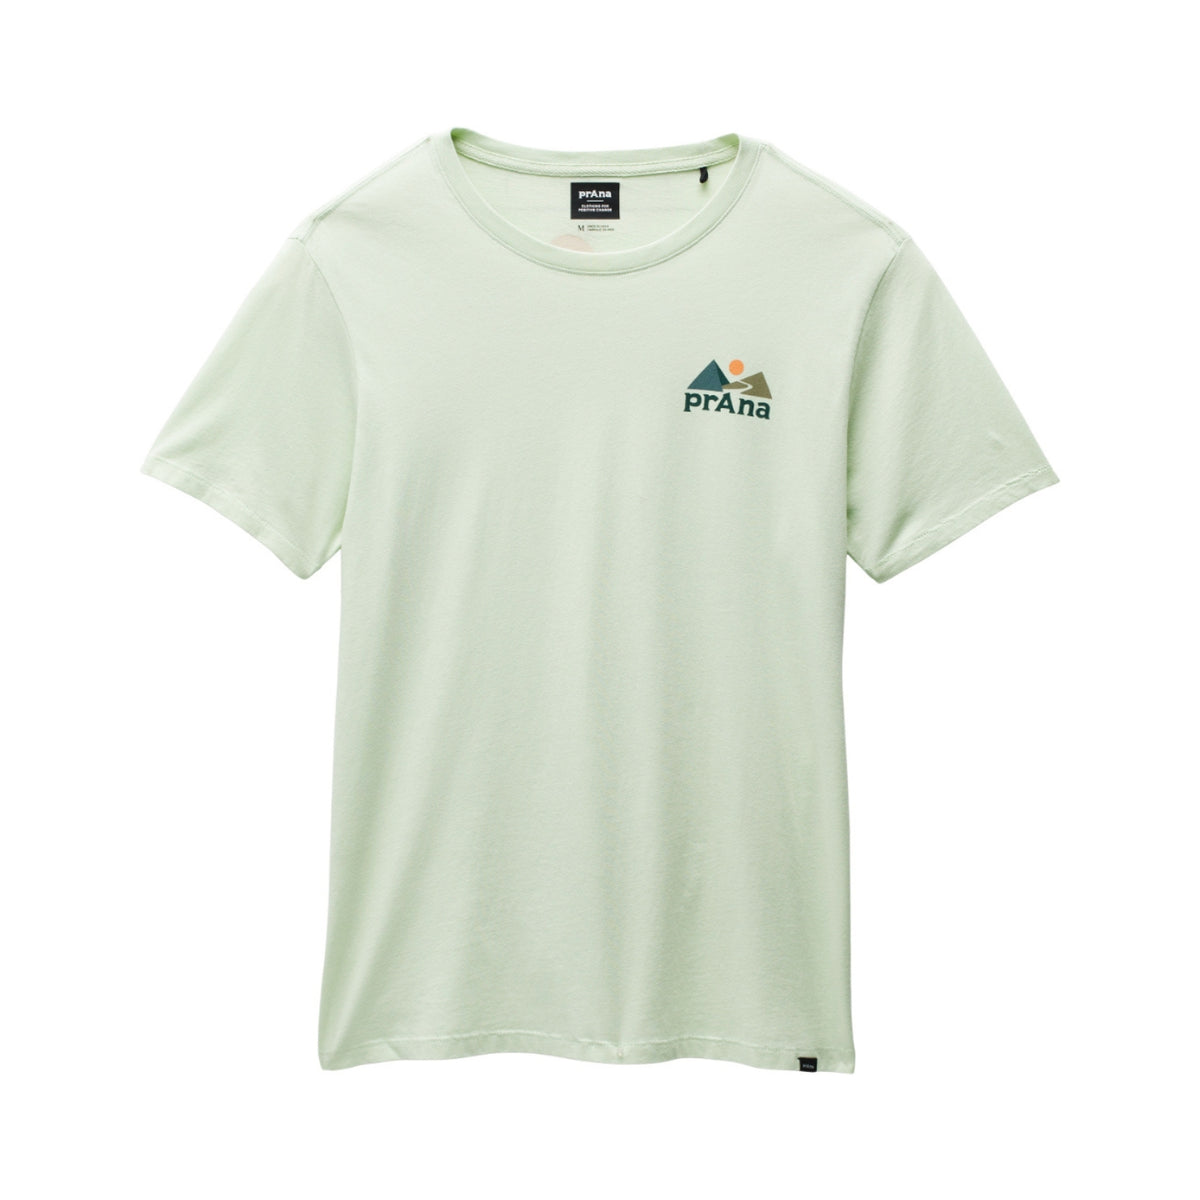 Prana Everyday Peaks T-Shirt - Pale Aloe - Unisex